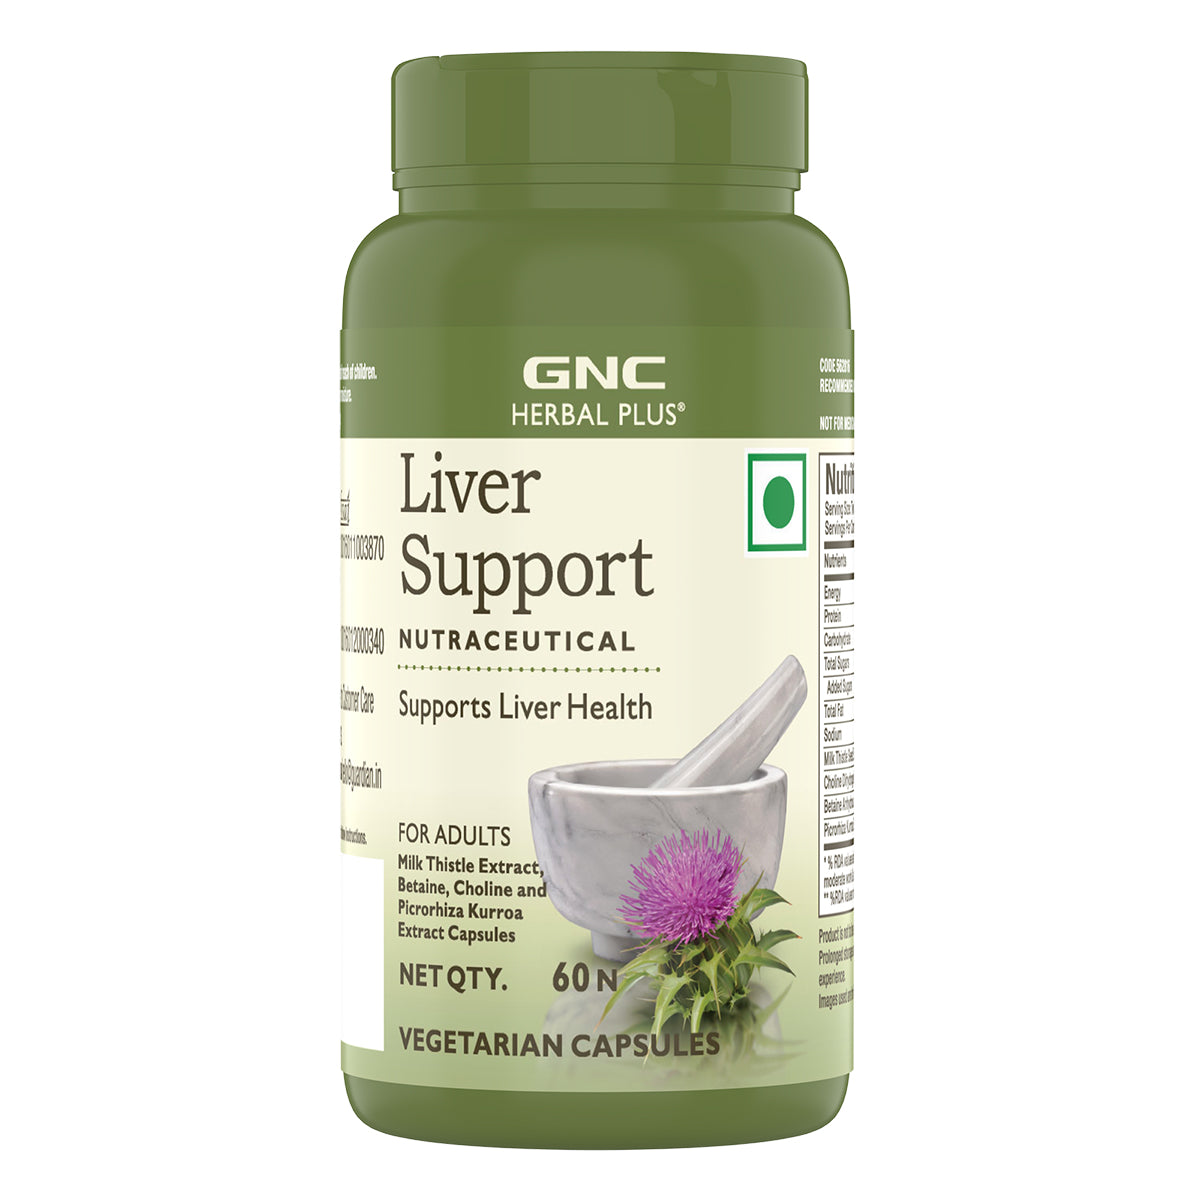 Liver support capsules